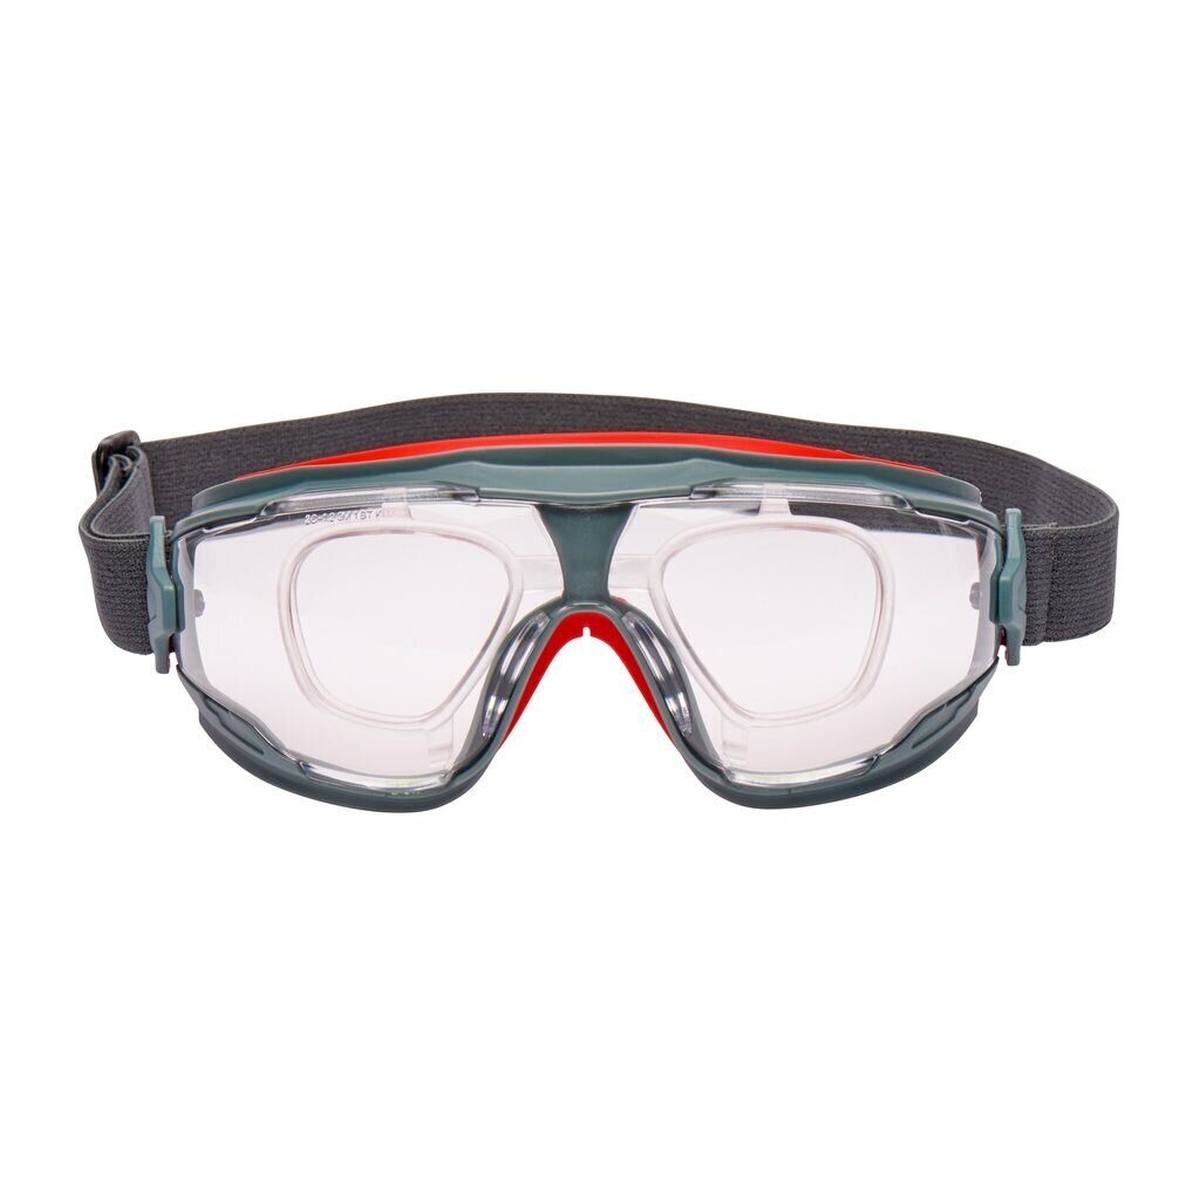 3M GoggleGear 500 full vision goggles GG501V, clear lens, Scotchgard anti-fog, UV